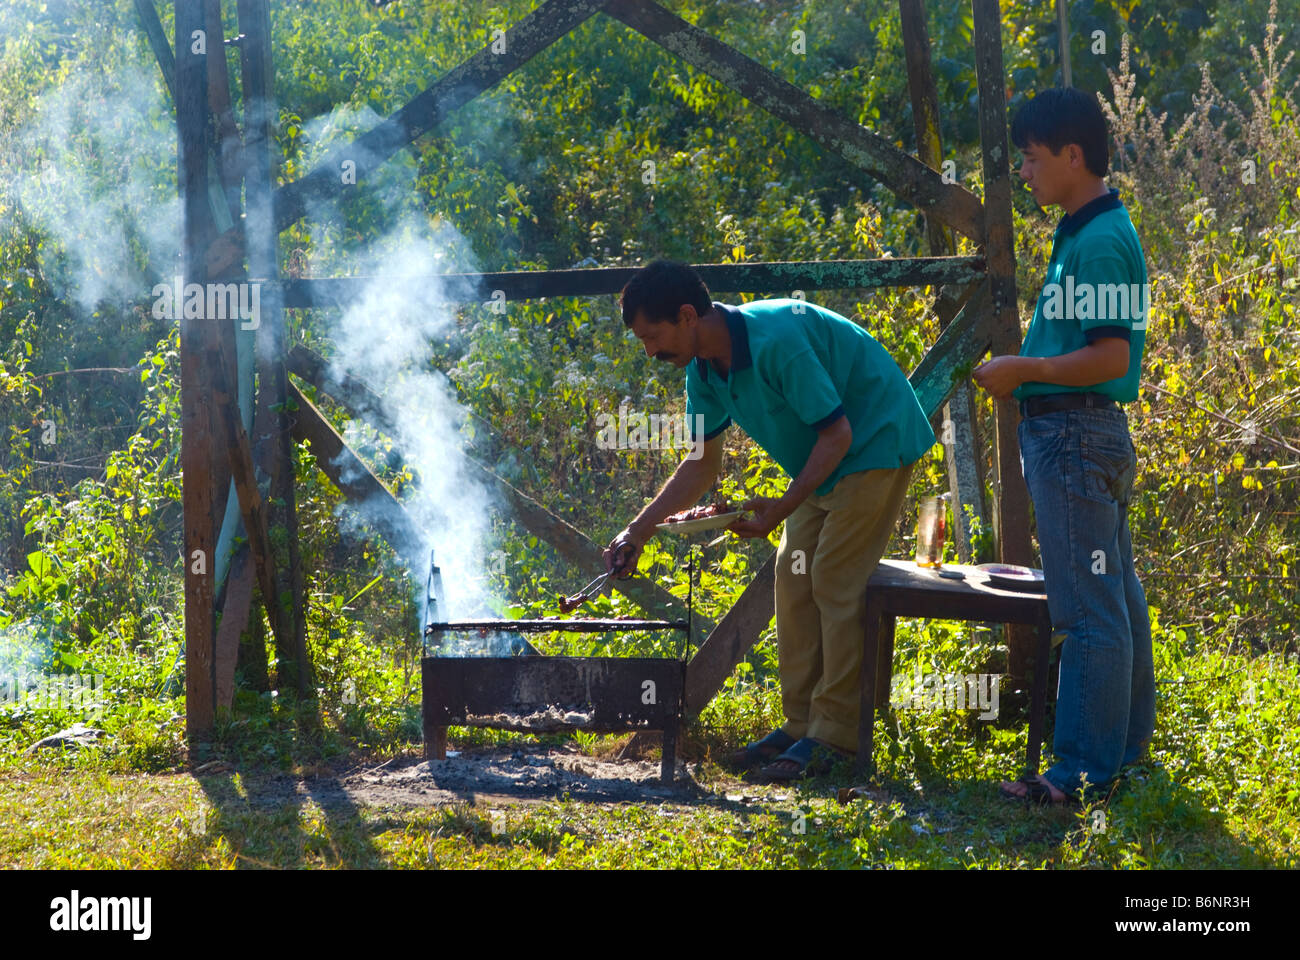 Staff at Glenburn Tea Estate, Darjeeling, India, prepare a barbeque for guests. Stock Photo